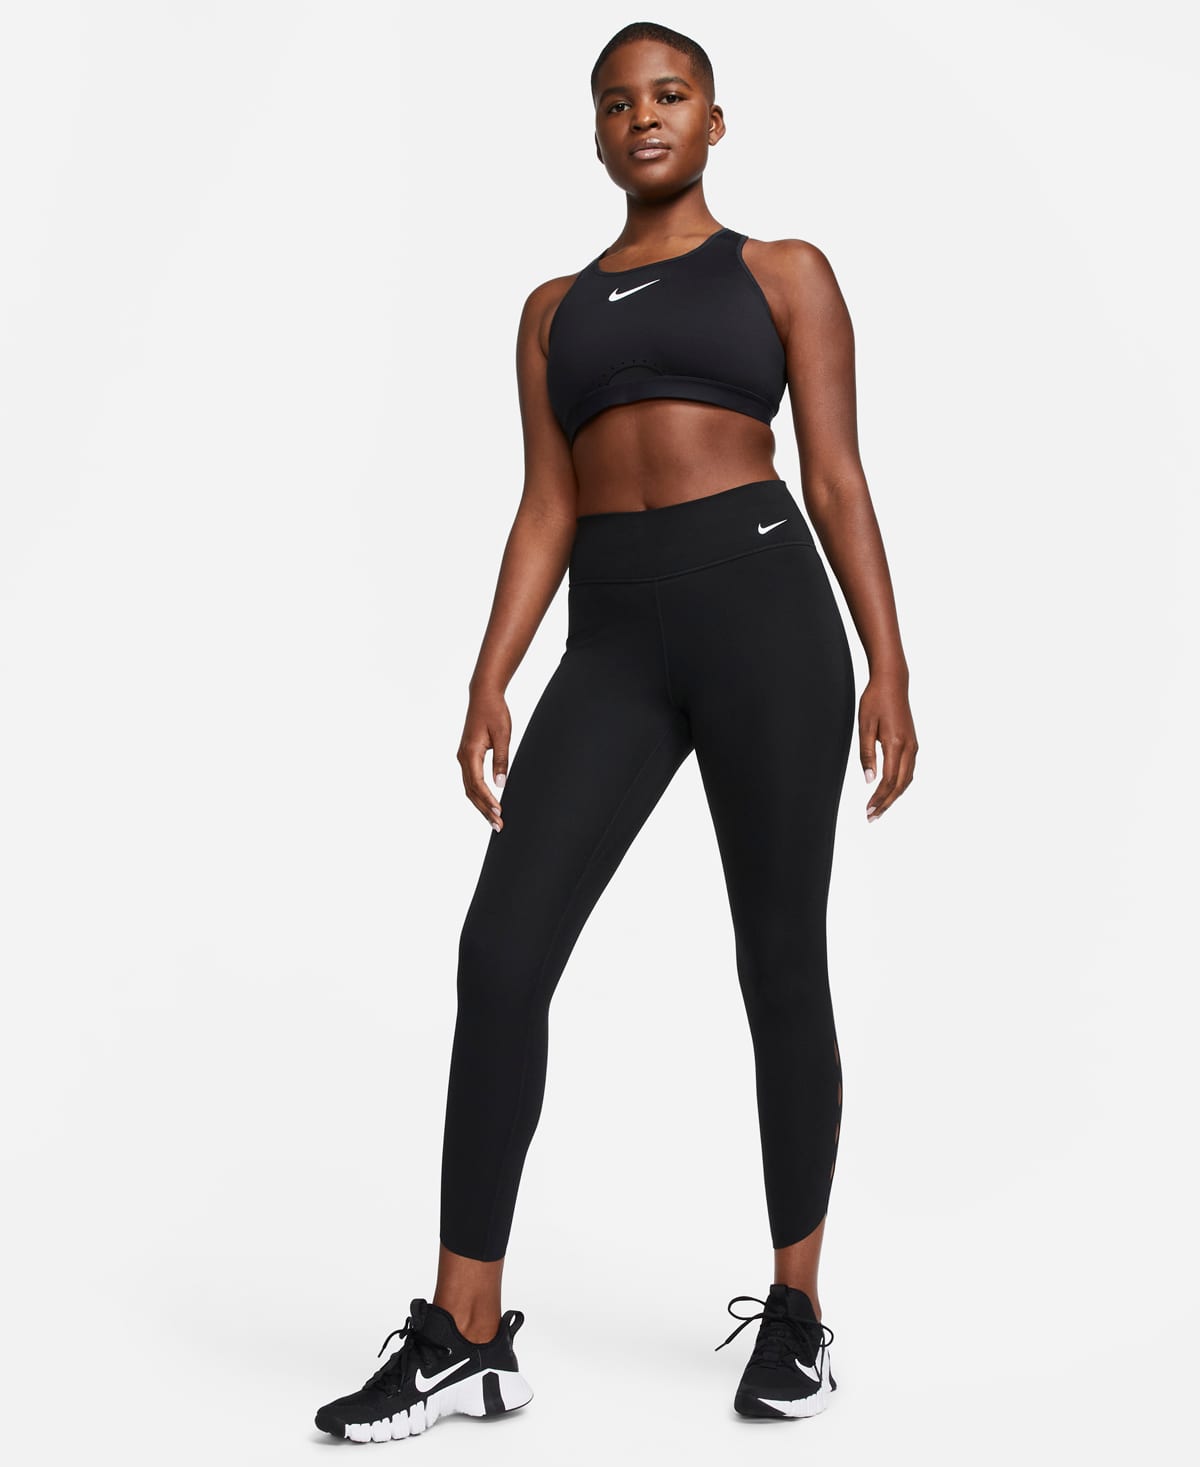 Velsigne arkitekt Selv tak Størrelsesoversigt for leggings til kvinder. Nike DK